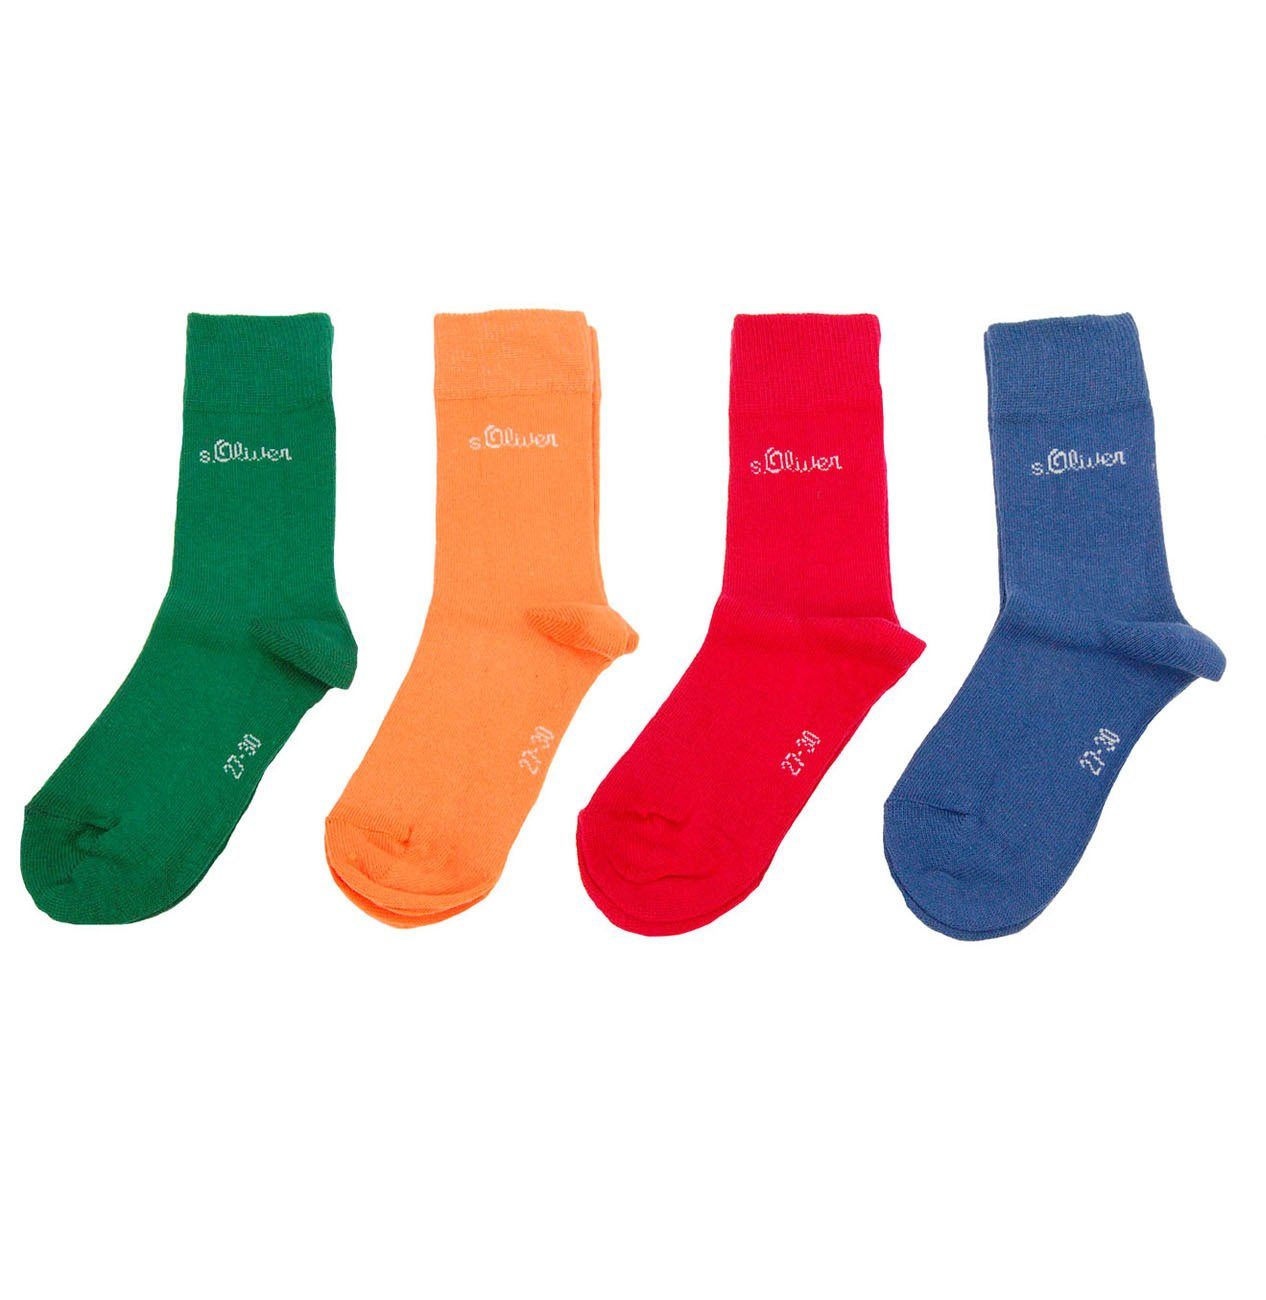 s.Oliver Langsocken S20205 (Packung, 4-Paar, 4 Paar) Kinder Socken, Jungen & Mädchen mit Baumwolle, Kindersocken 50 multicolour